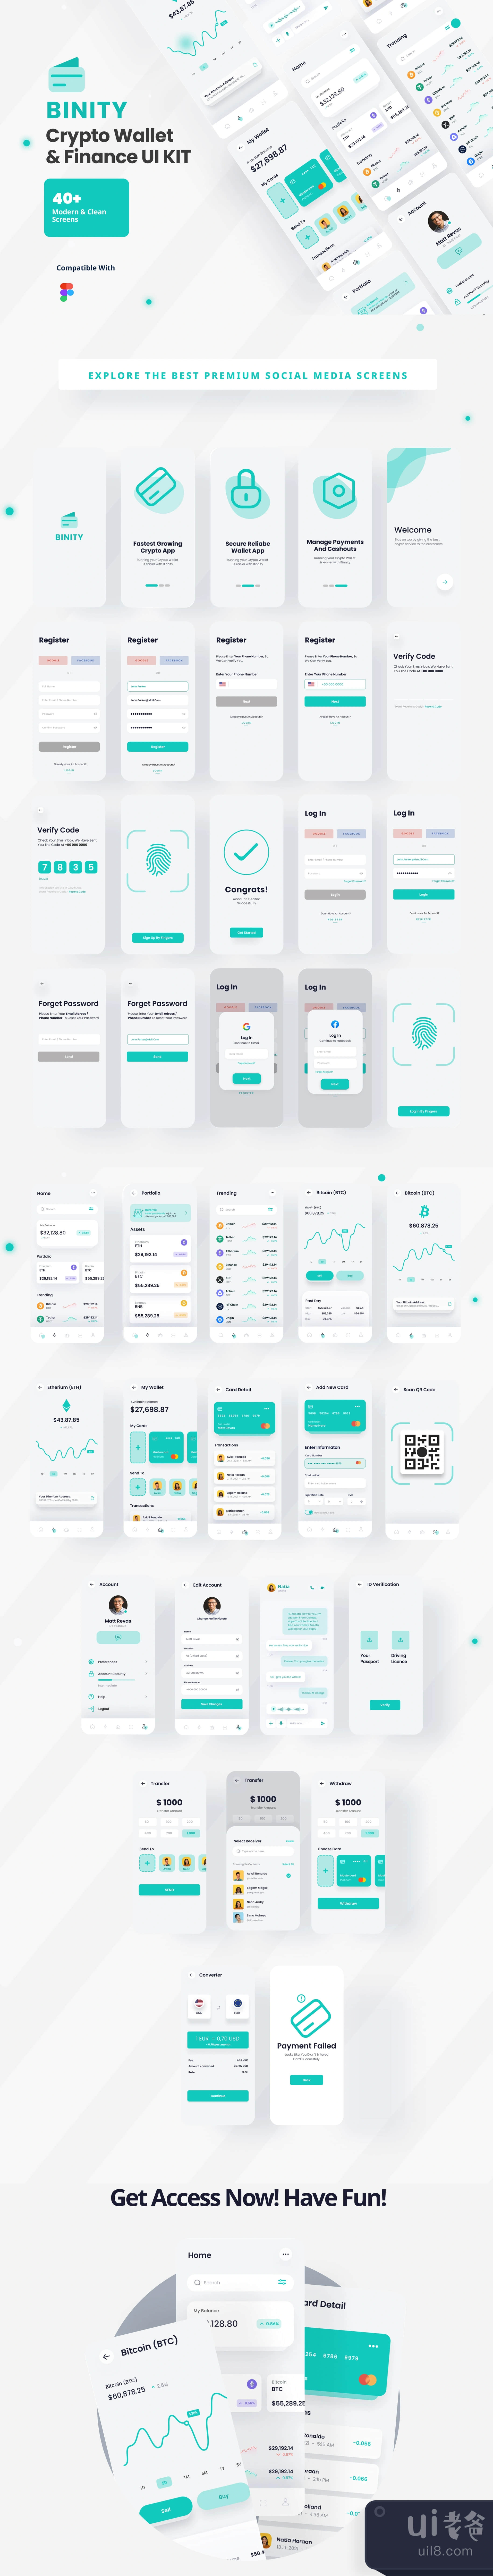 Binity - Crypto Wallet and Finance App UI Kit (Bin插图